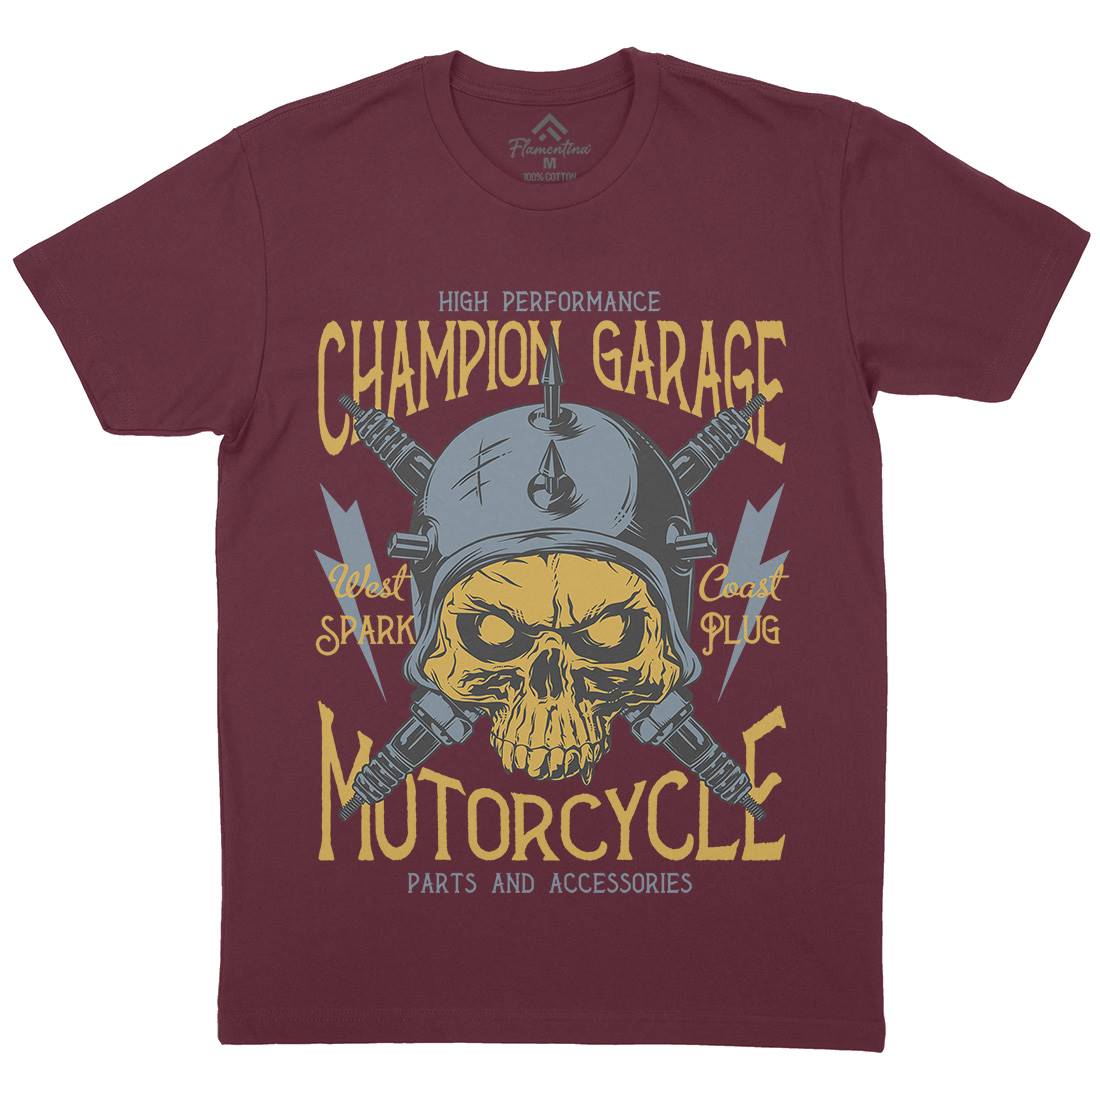 Champion Garage Mens Organic Crew Neck T-Shirt Motorcycles D917